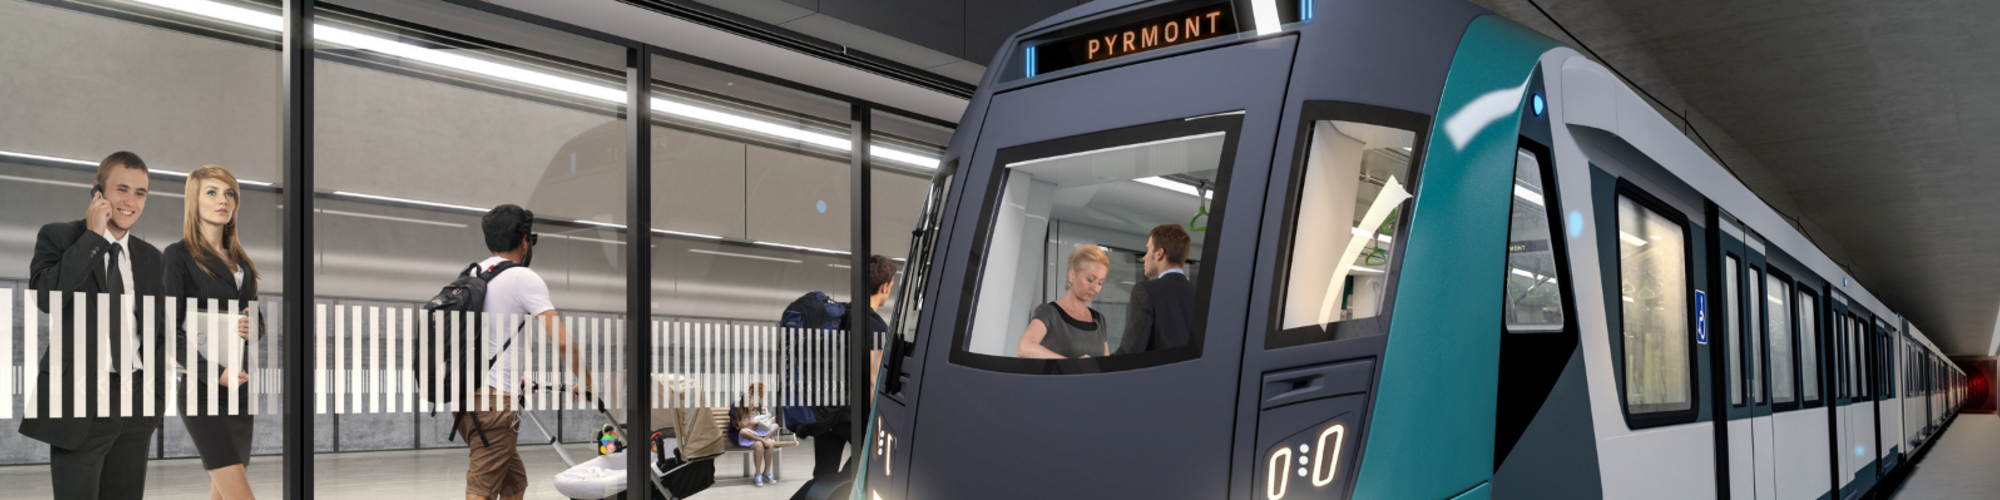 Artist's impression of Pyrmont Station platform